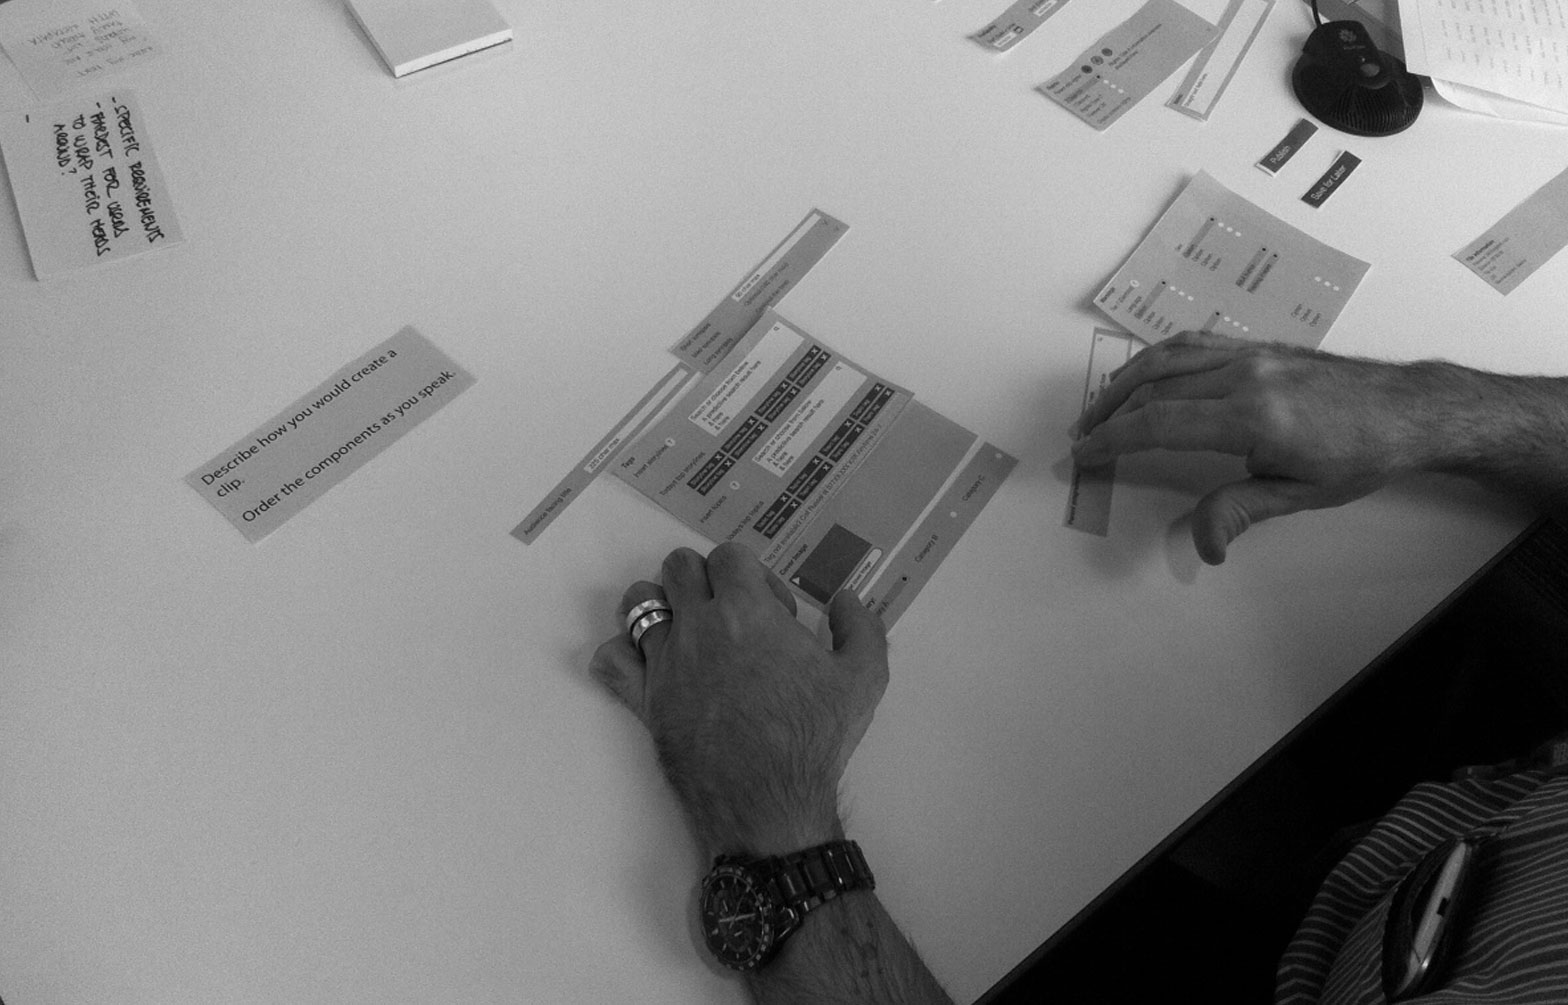 Testing interfaces through paper prototypes